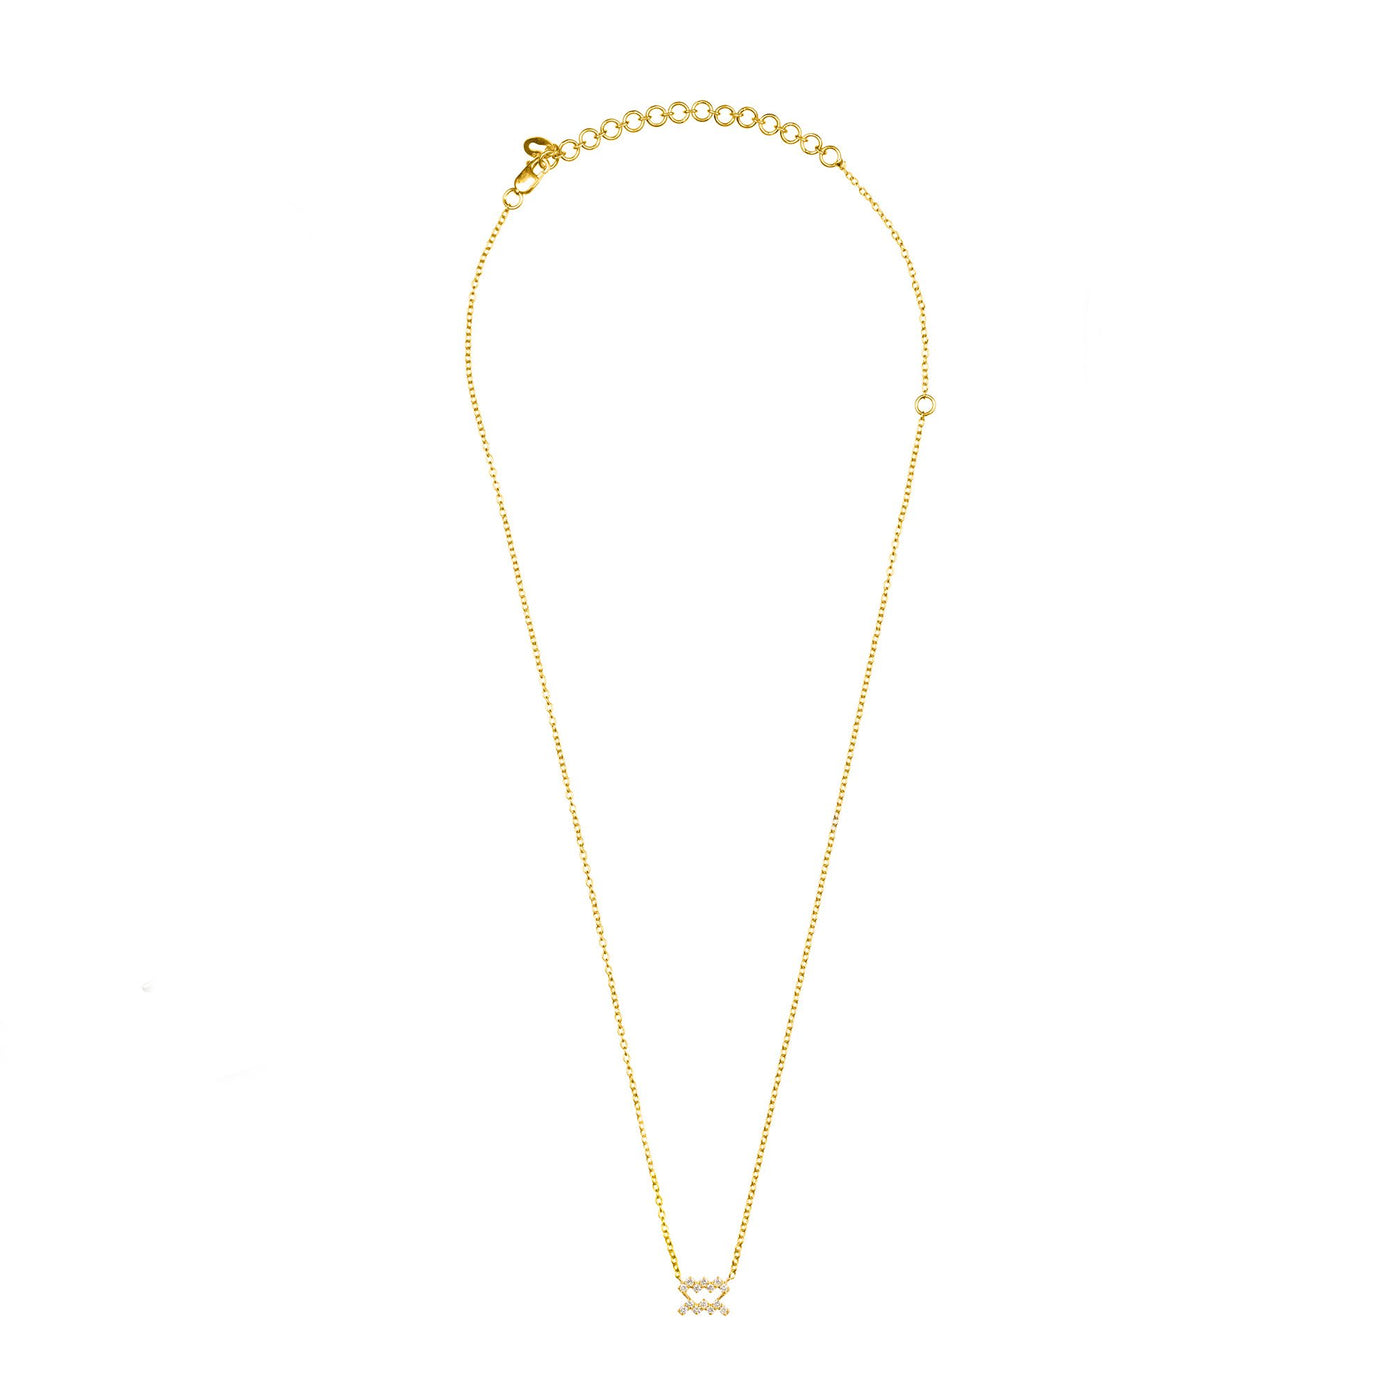 Aquarius - Necklace - 22 carat gold plated - Diamonds